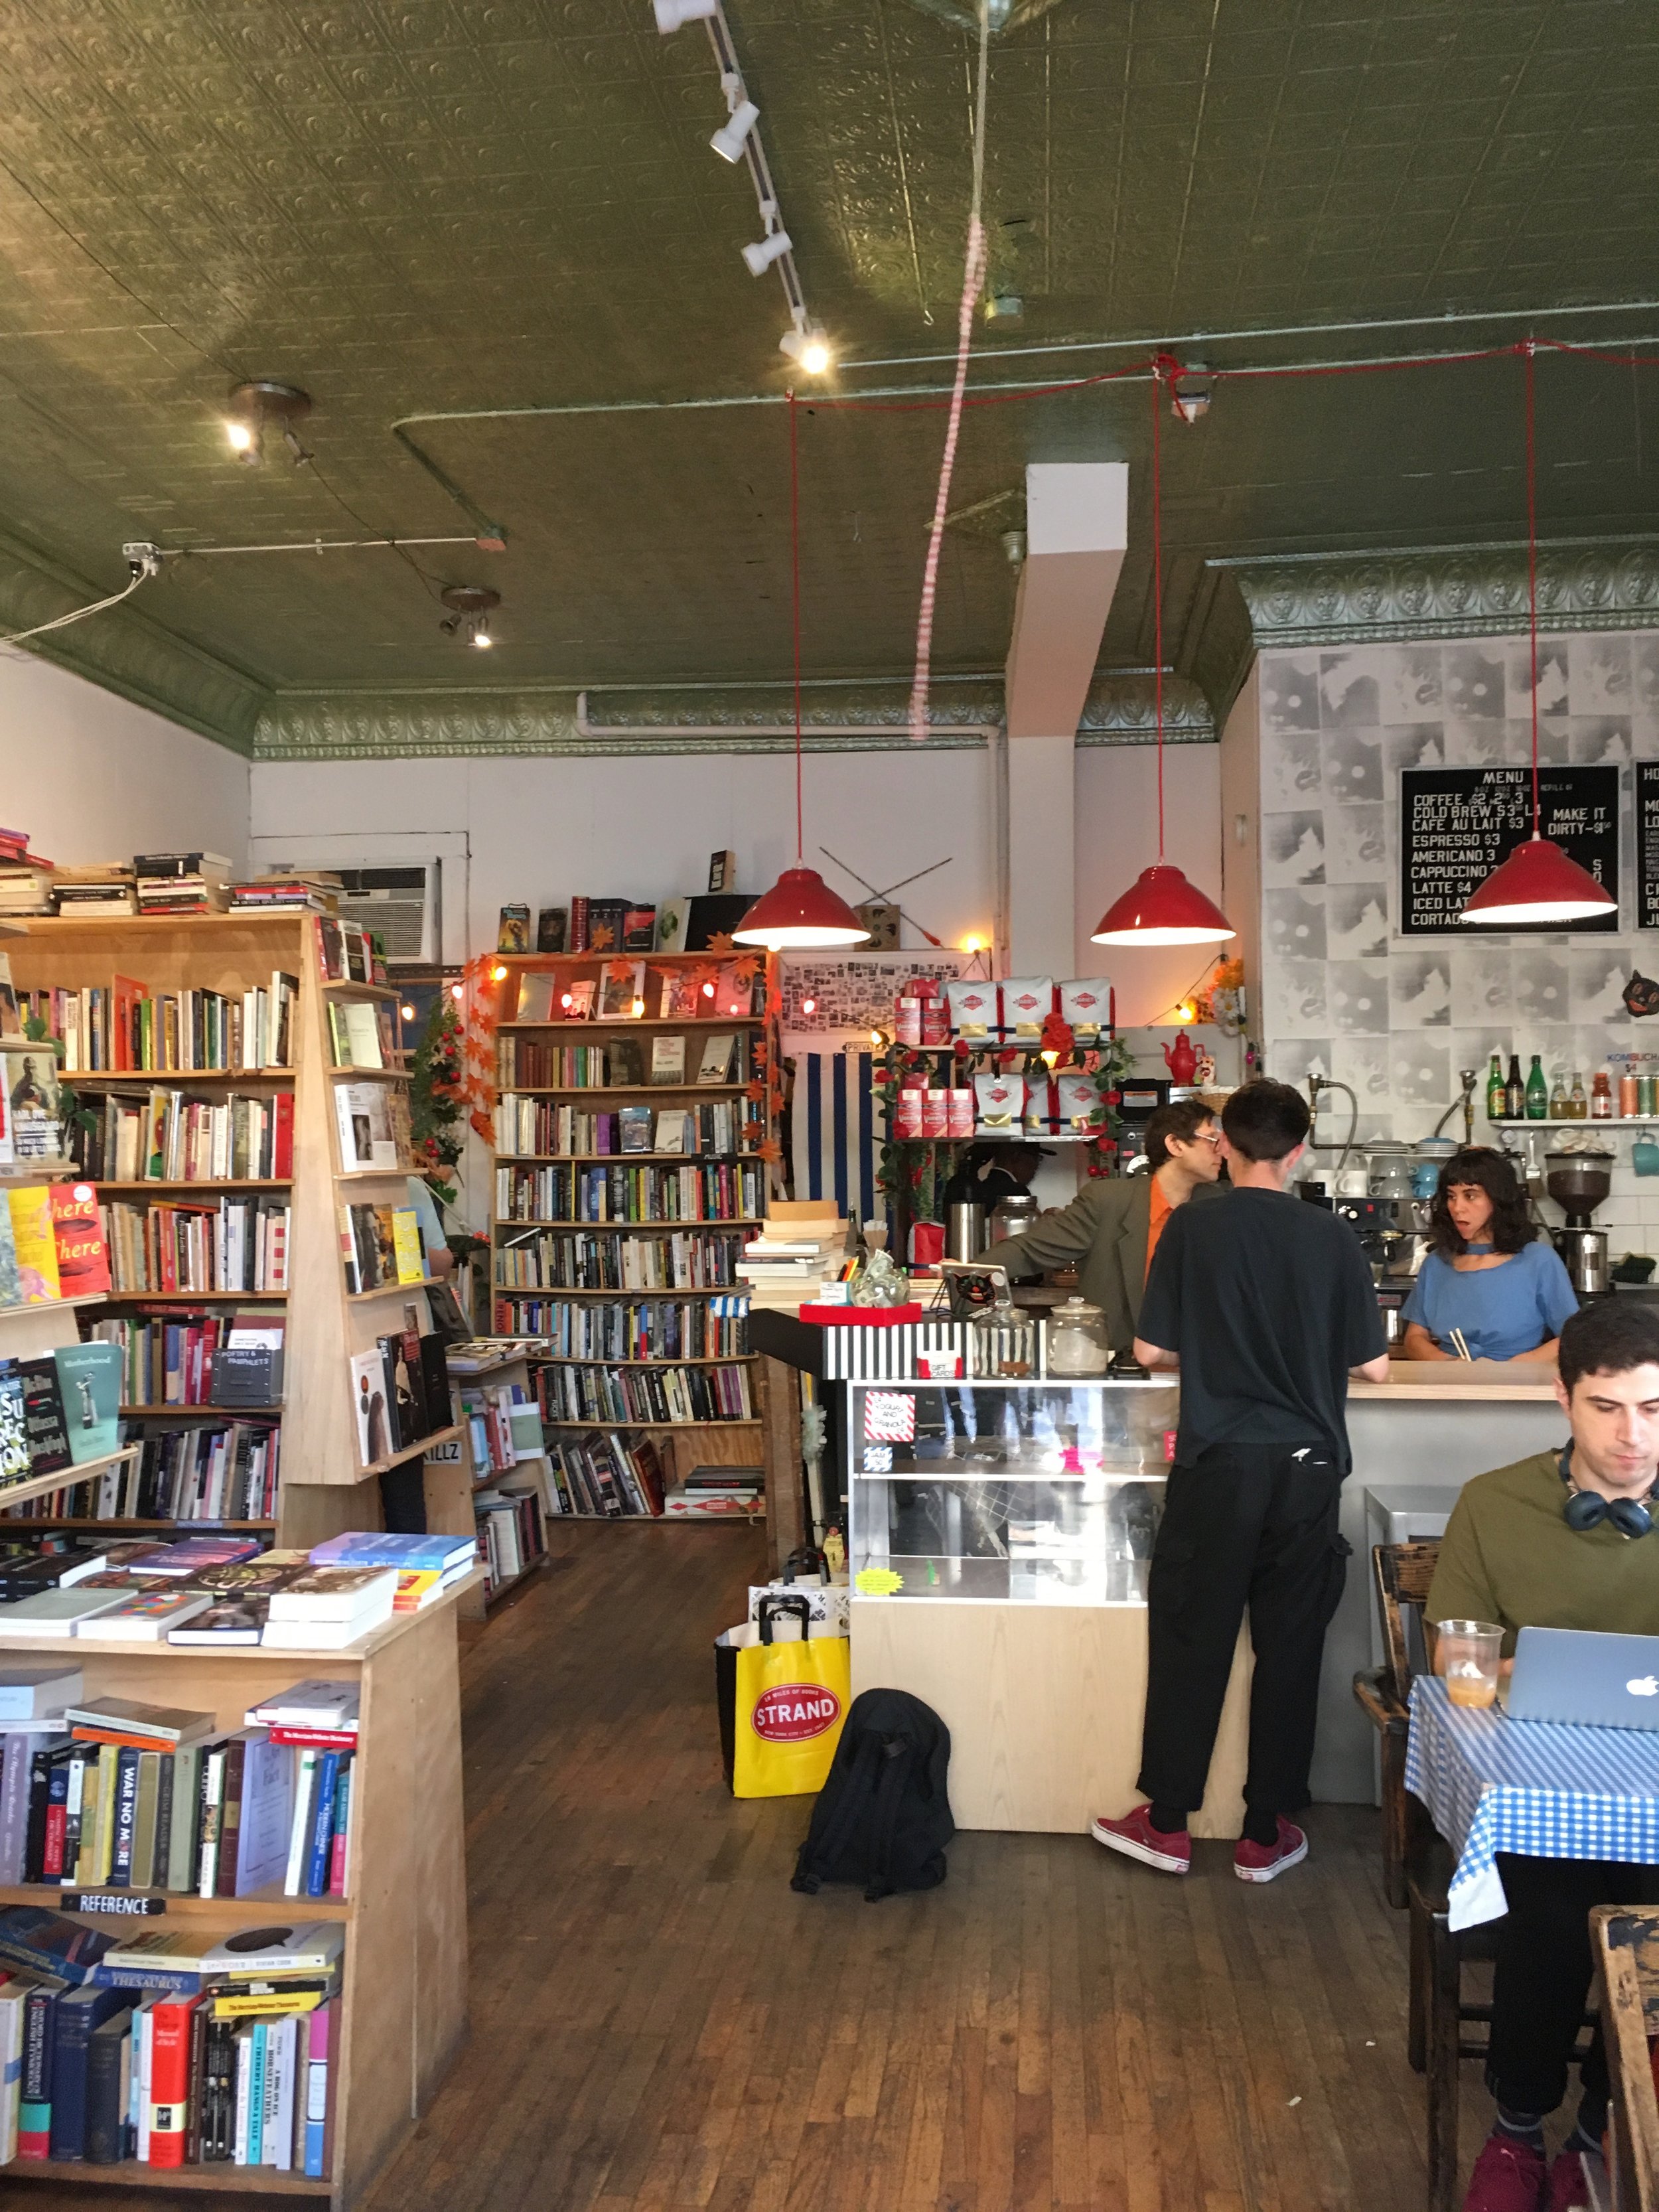 Topos--a rare used bookstore